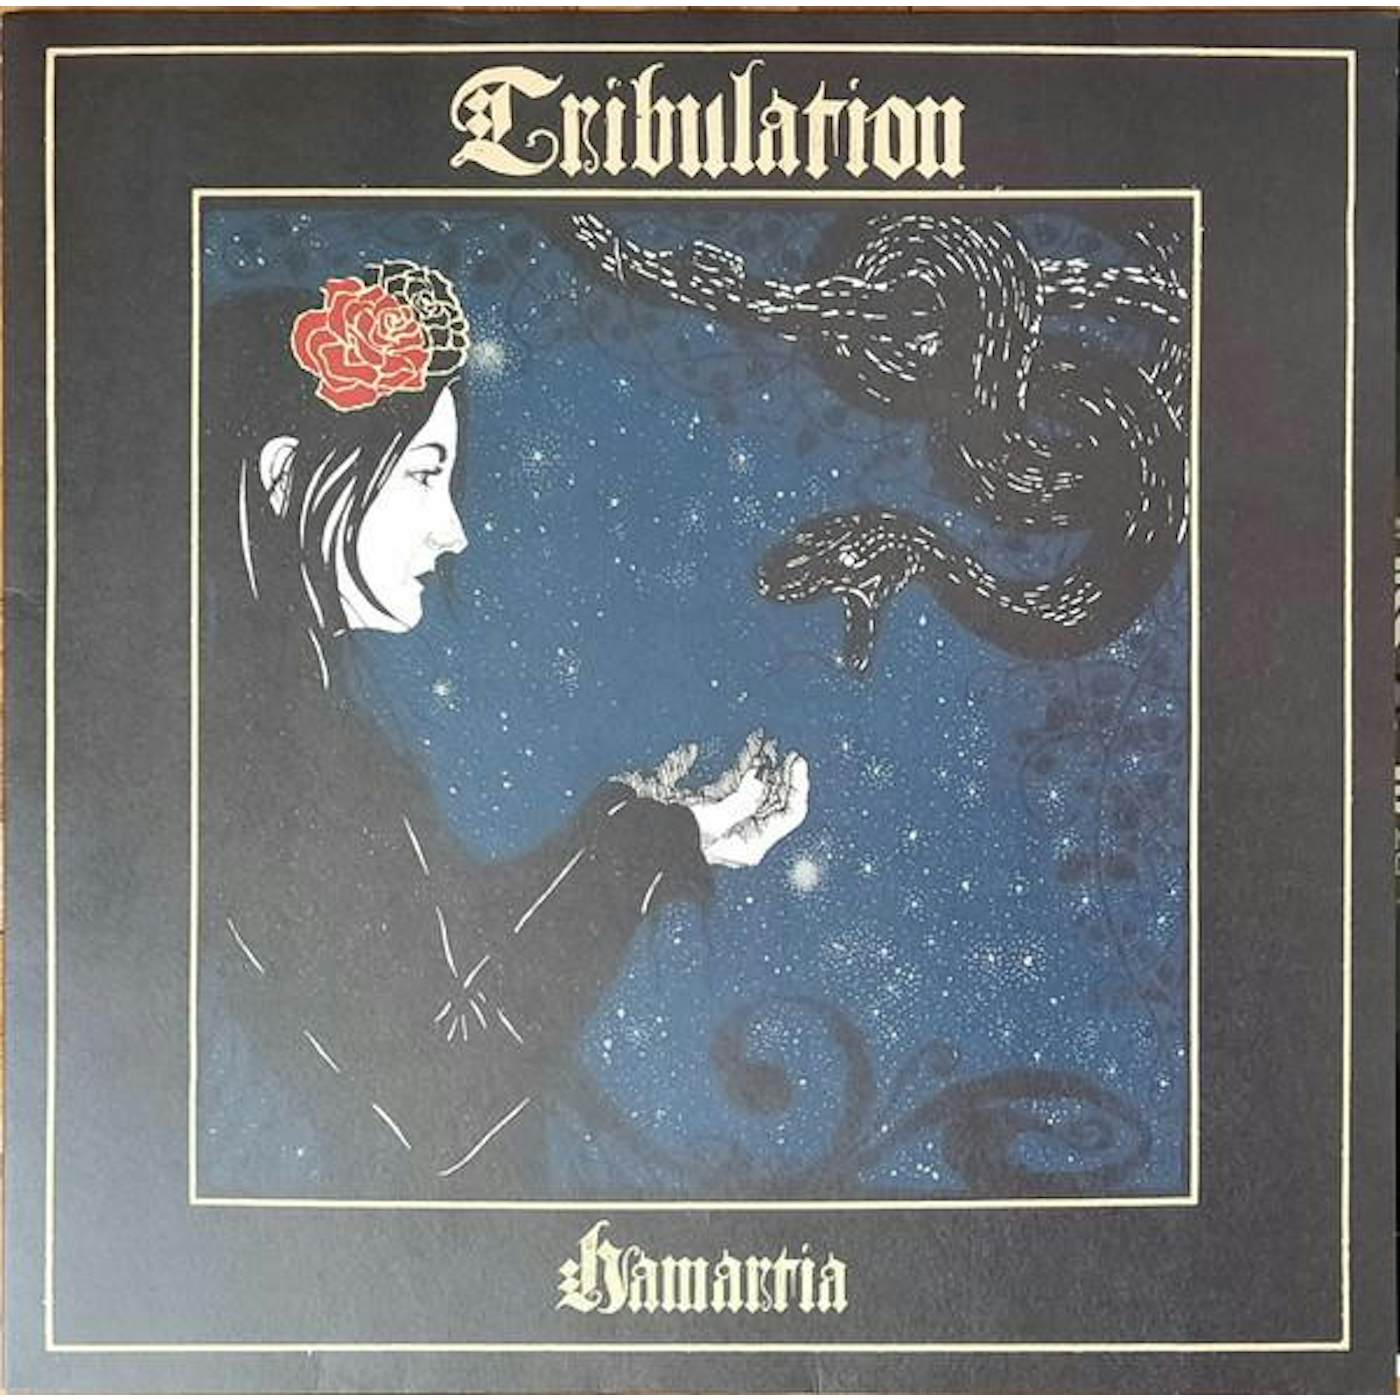 Tribulation Hamartia Vinyl Record